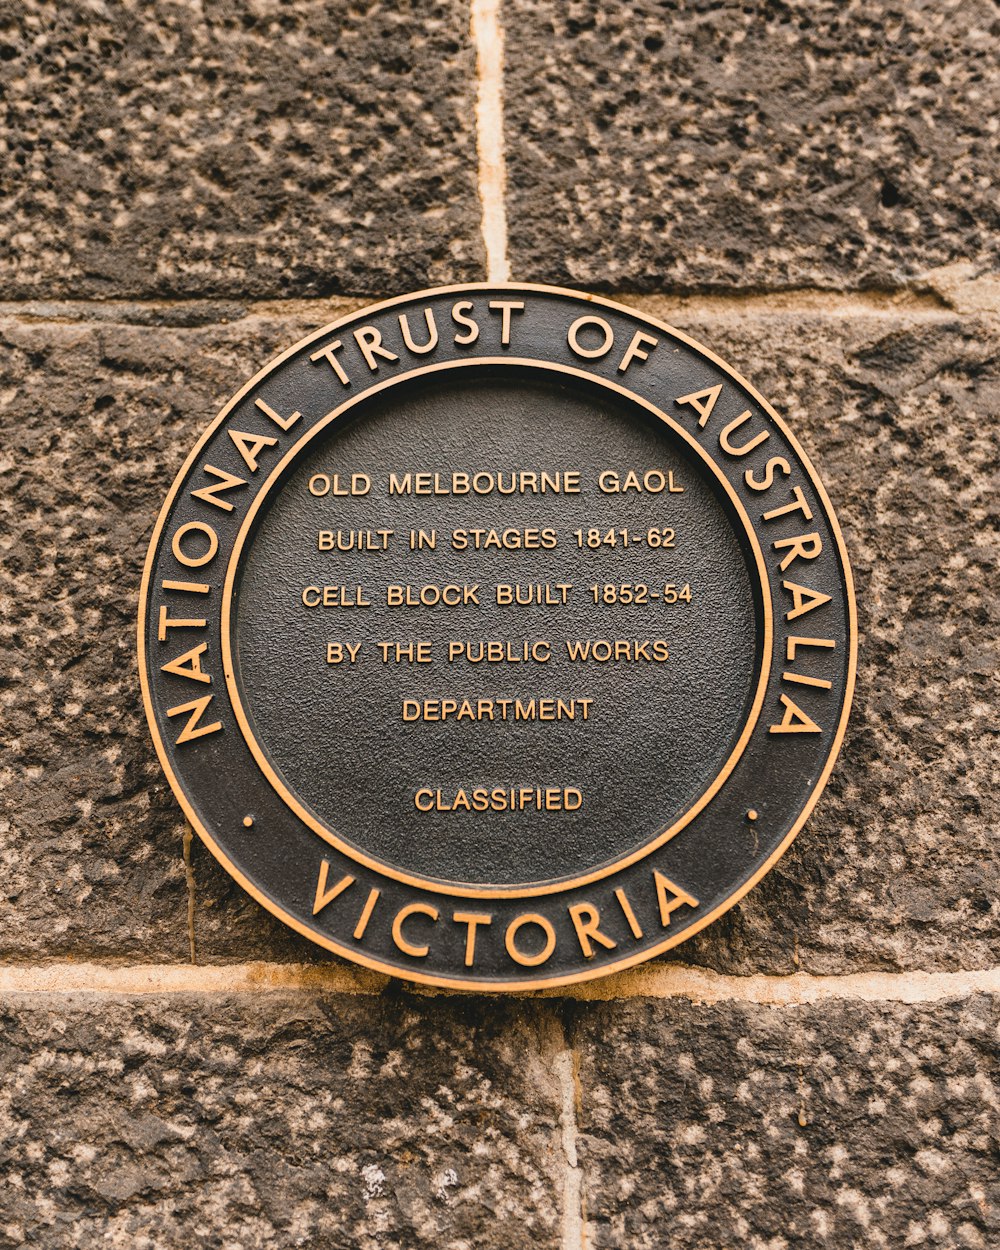 Moneda redonda marrón y negra del National Trust of Australia Victoria